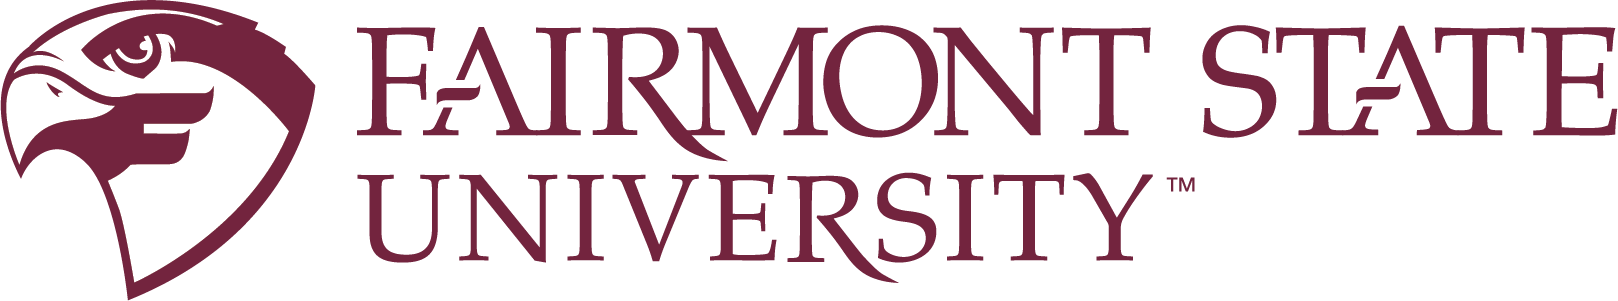 Fairmont State Logo - University Brand | About Fairmont State University